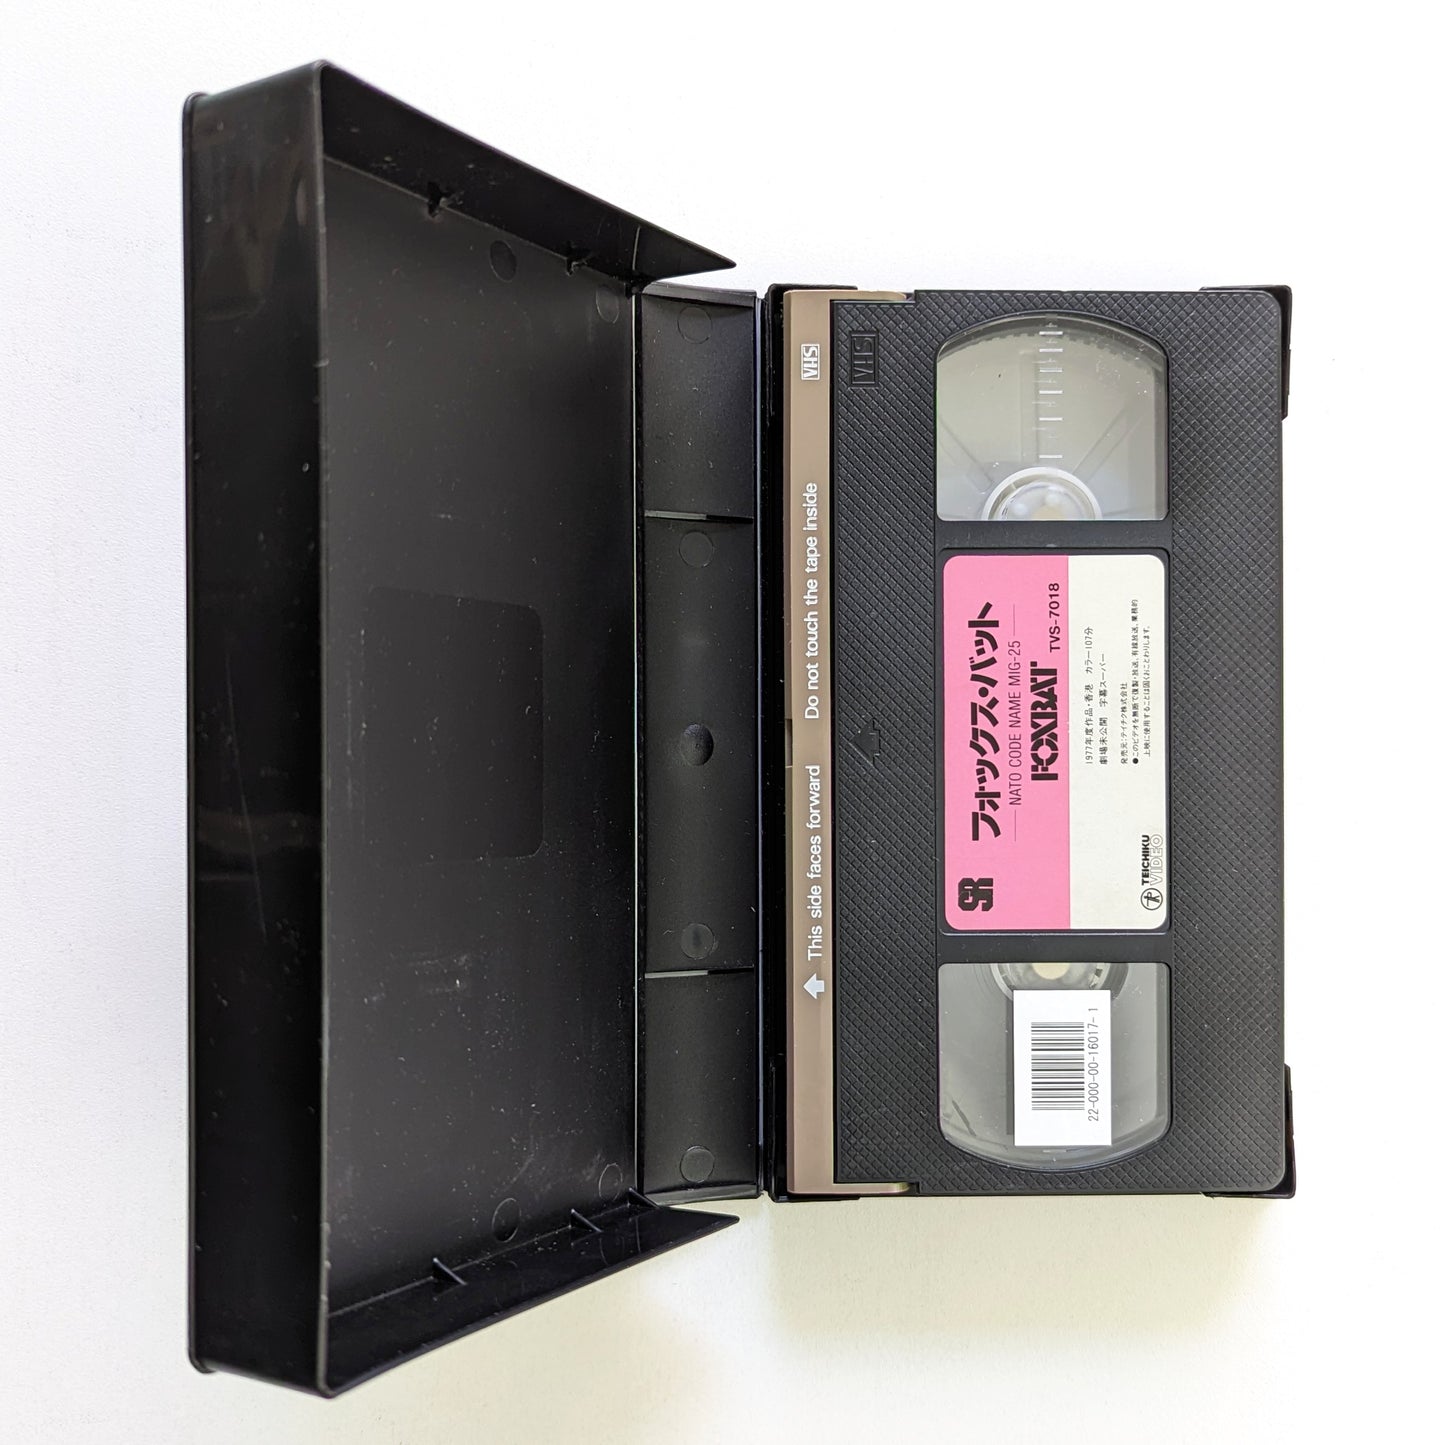 Foxbat (1977) Japanese VHS